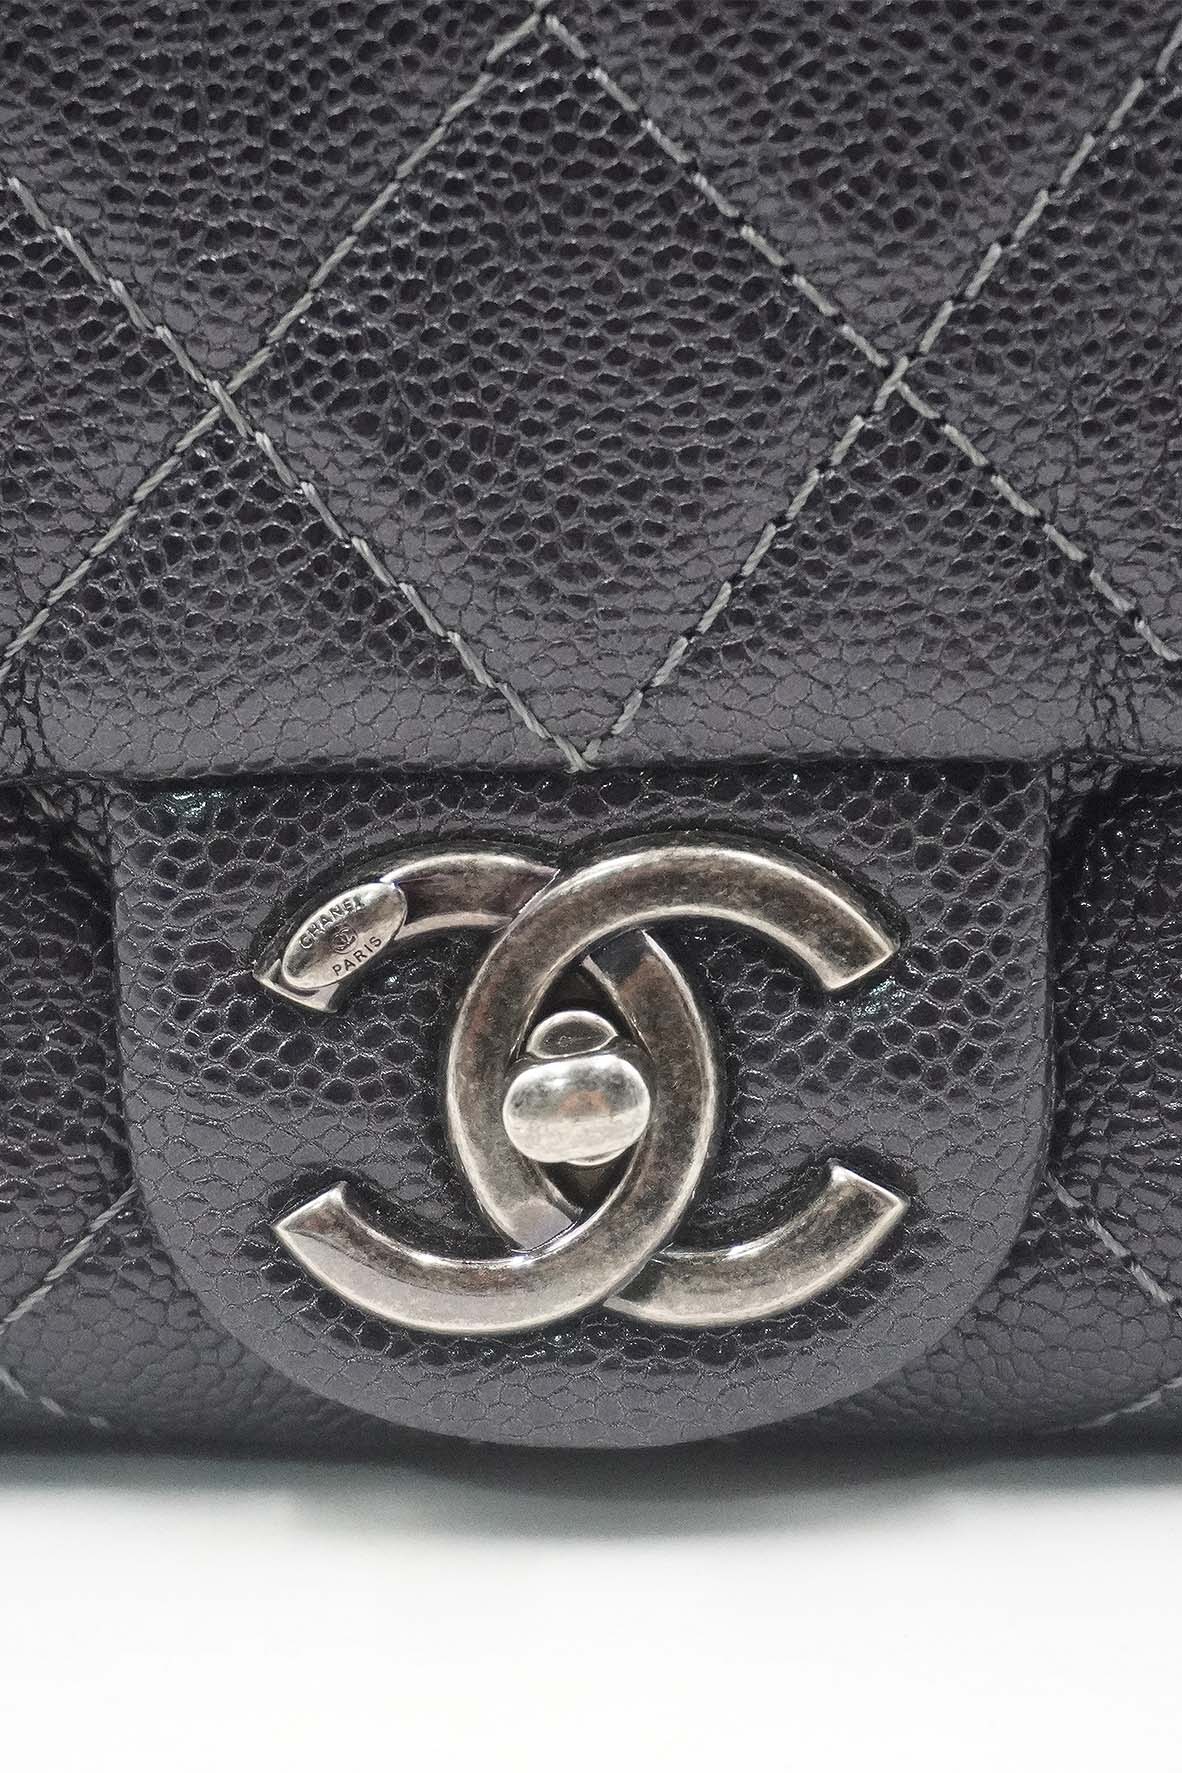 Chanel Easy Caviar Flap Jumbo Bag - Black Shoulder Bags, Handbags -  CHA26469